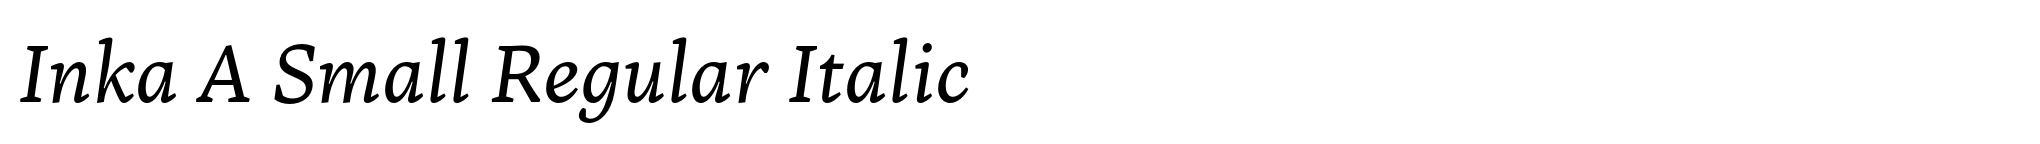 Inka A Small Regular Italic image